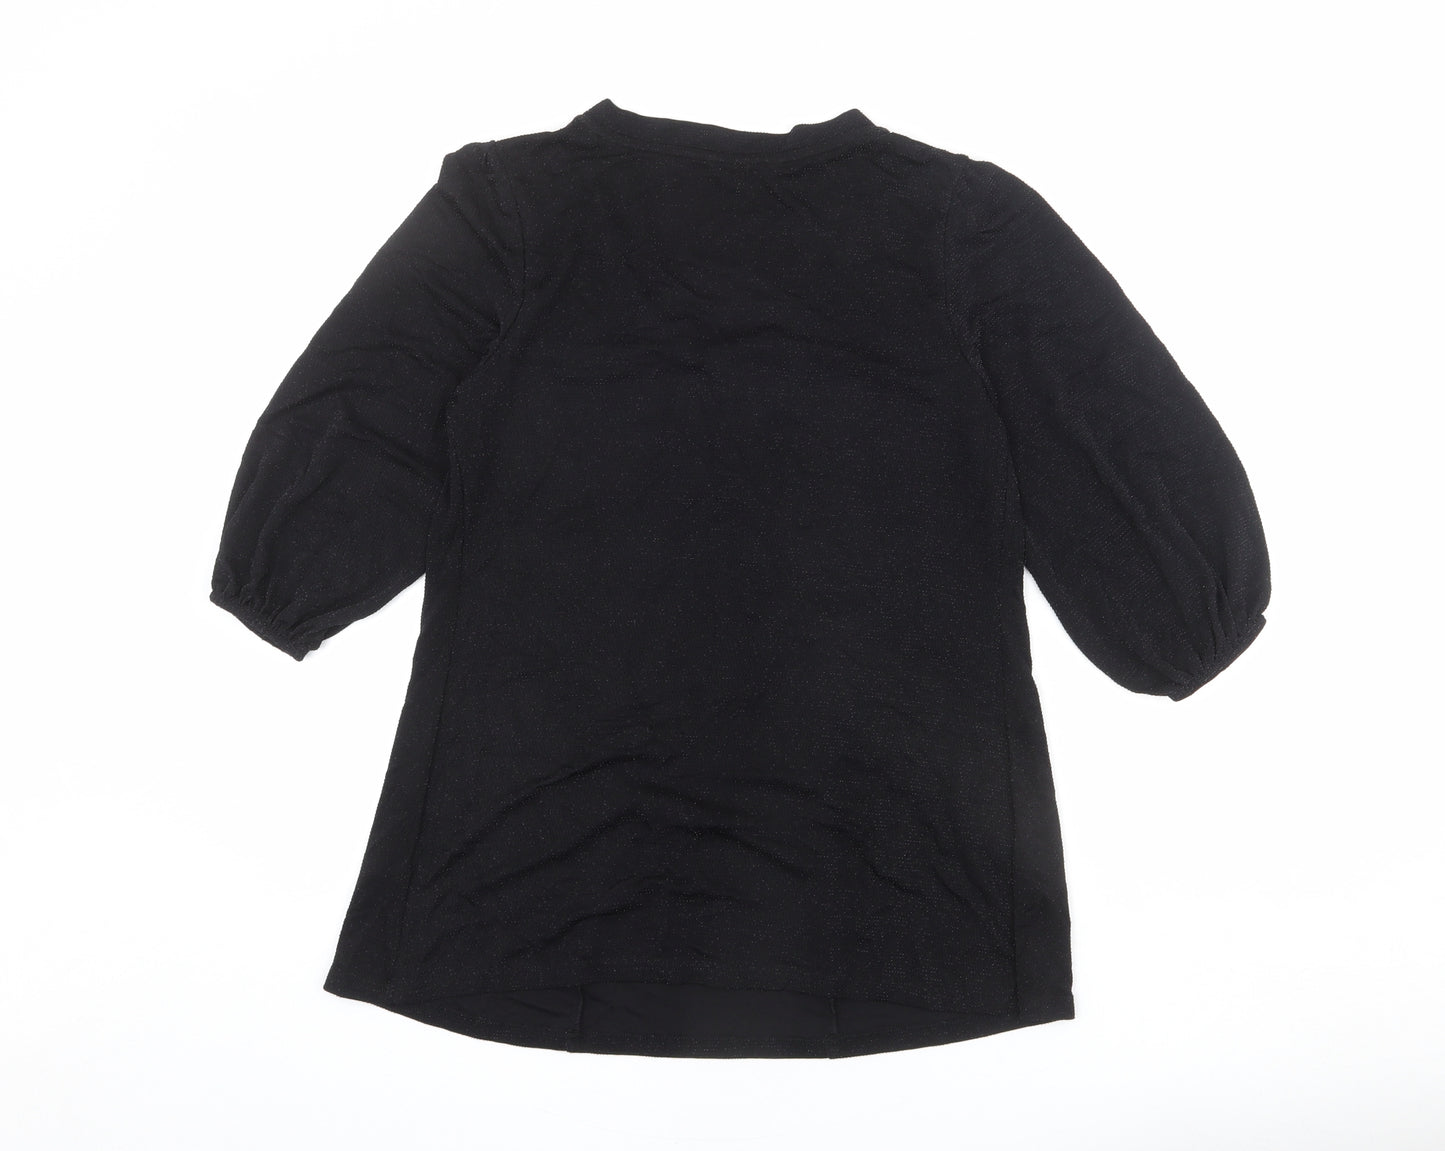 Bonmarché Womens Black Nylon Basic Blouse Size 12 V-Neck